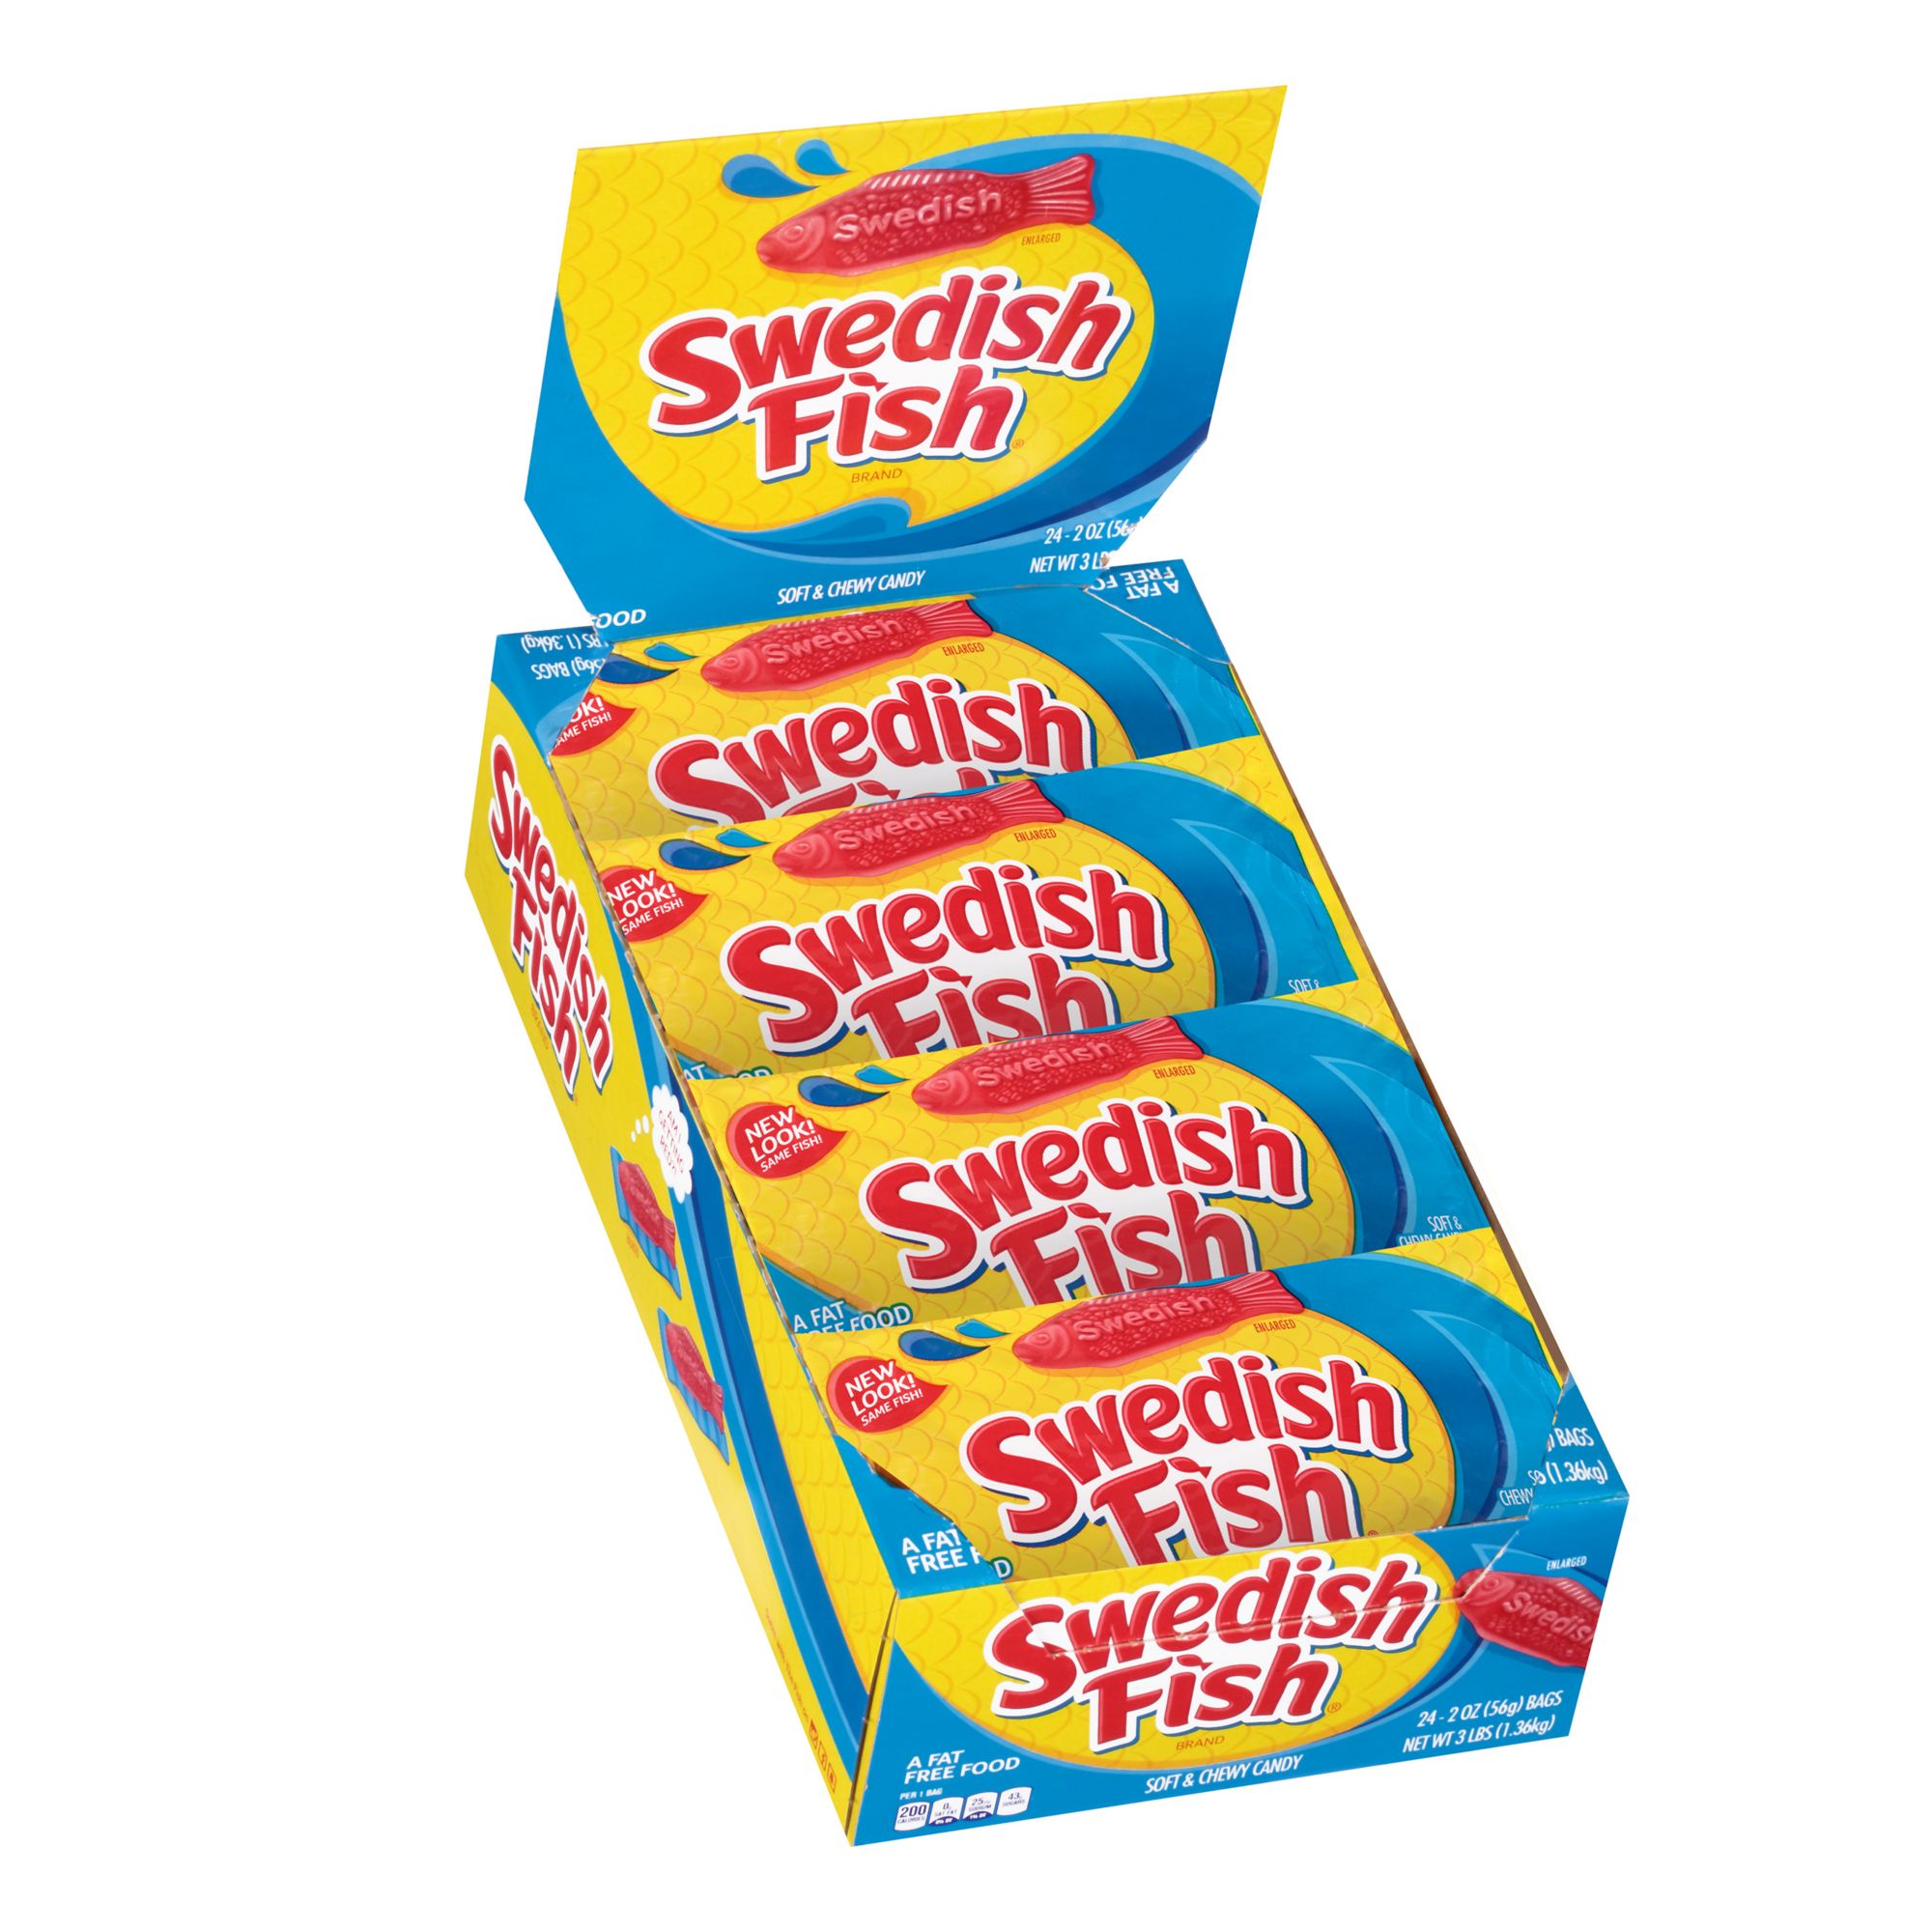 Assorted Swedish Fish